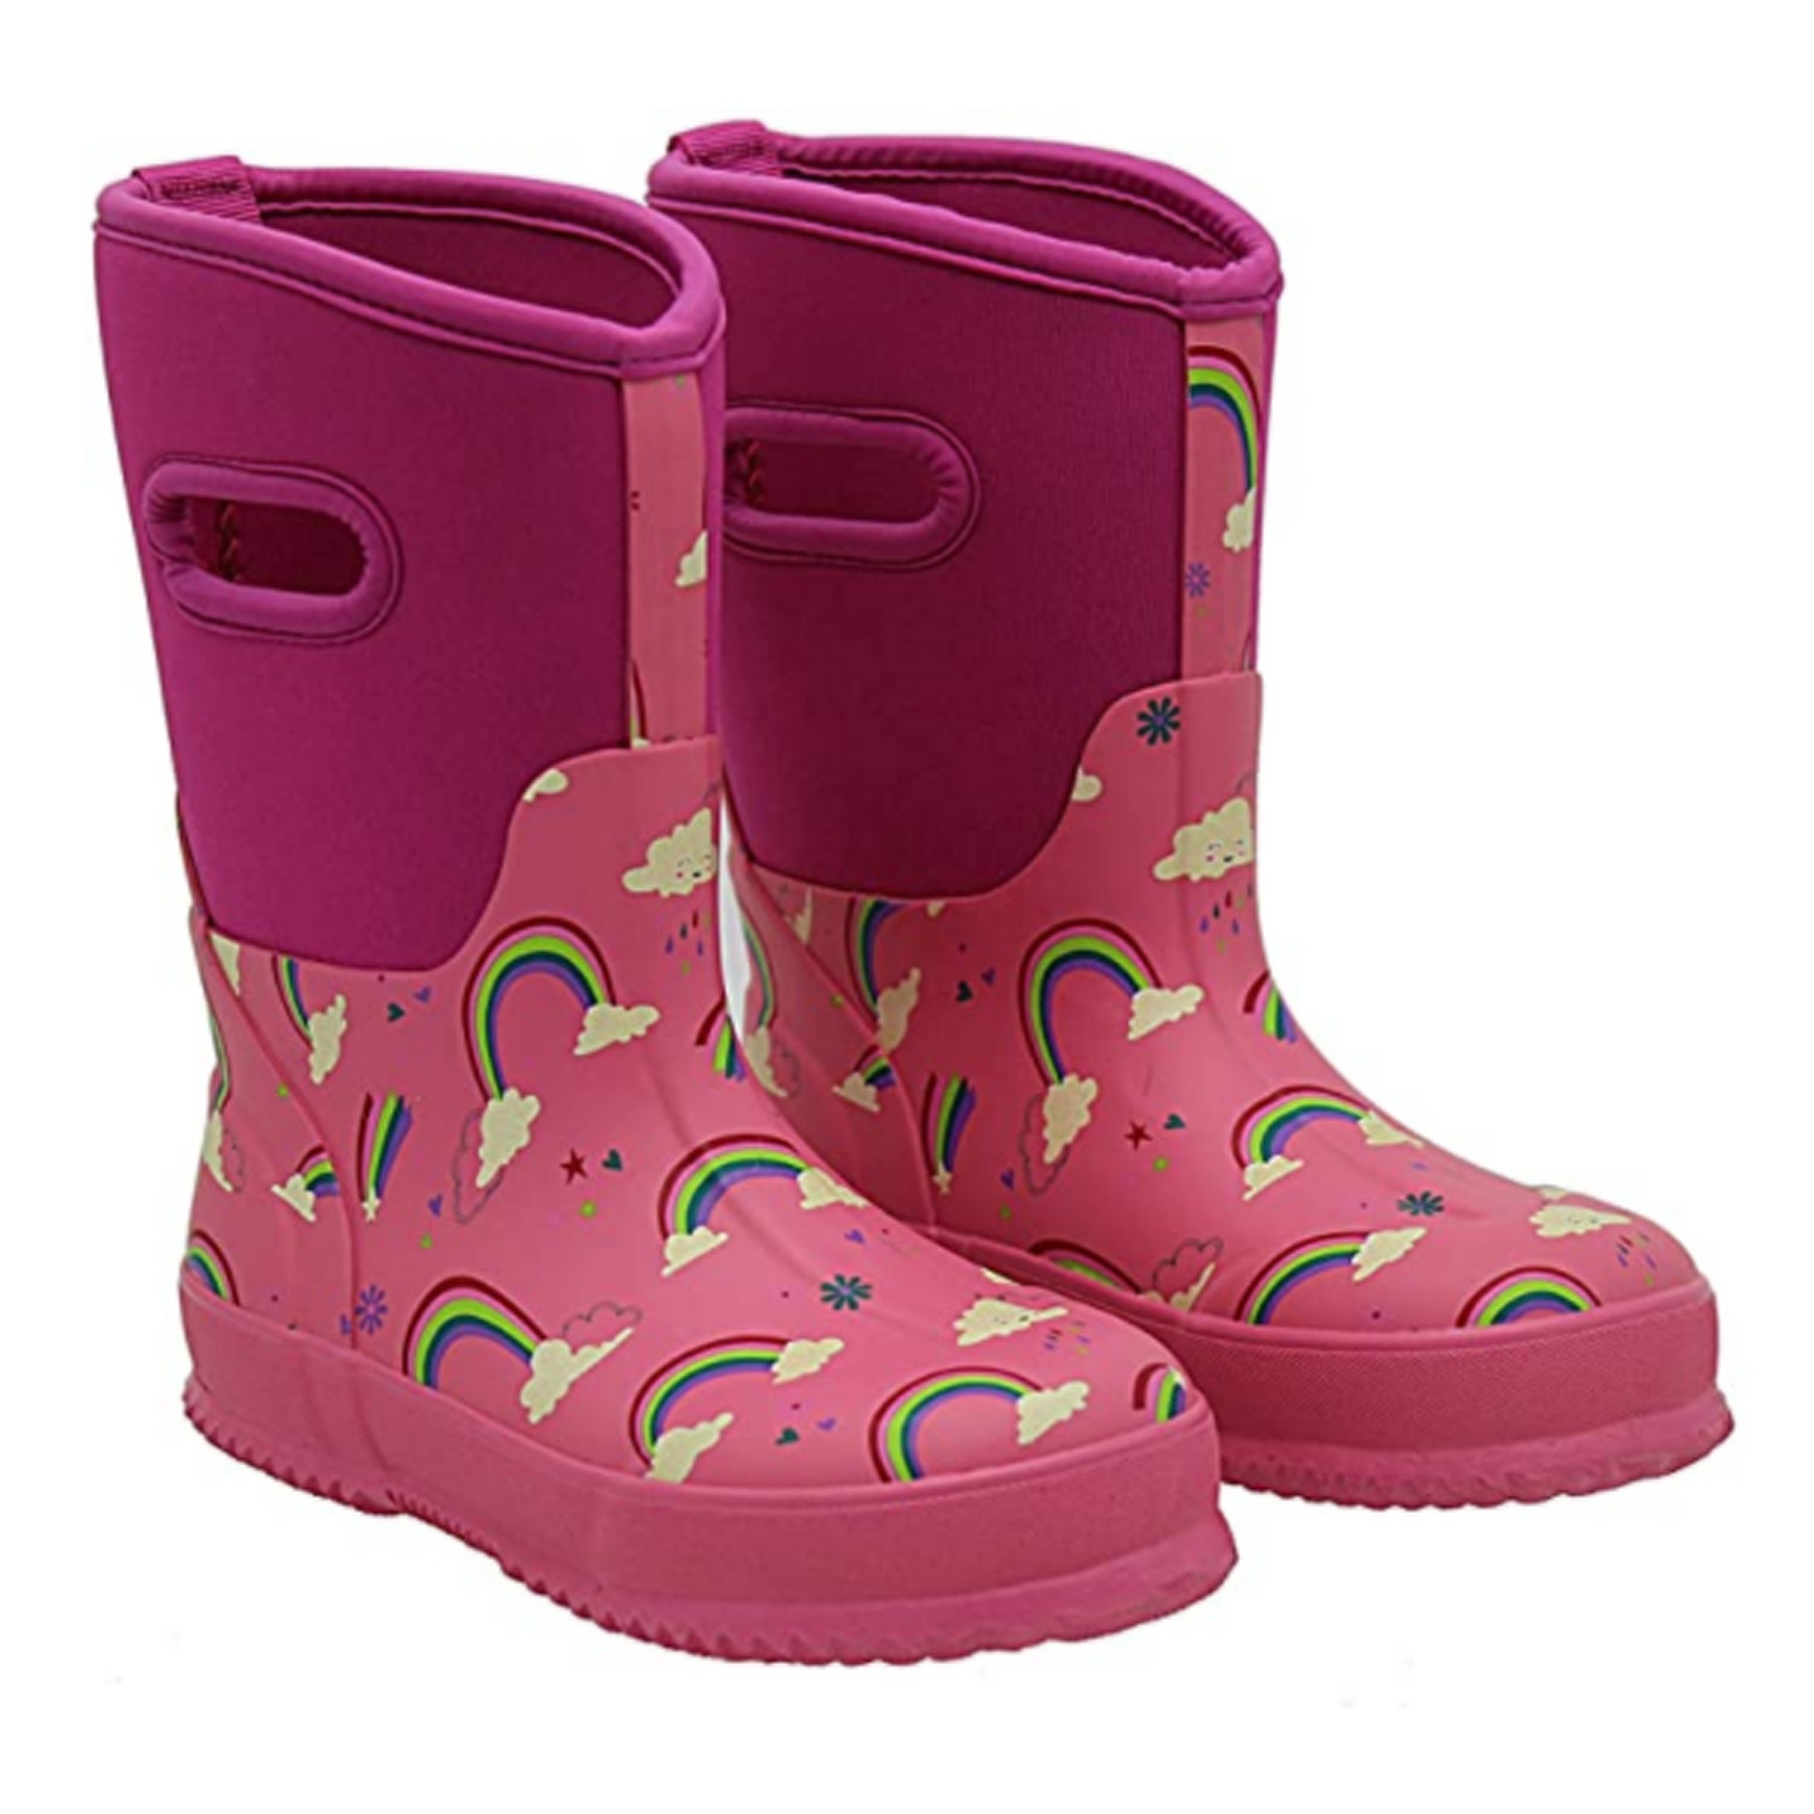 Children's Neoprene Rain Boots